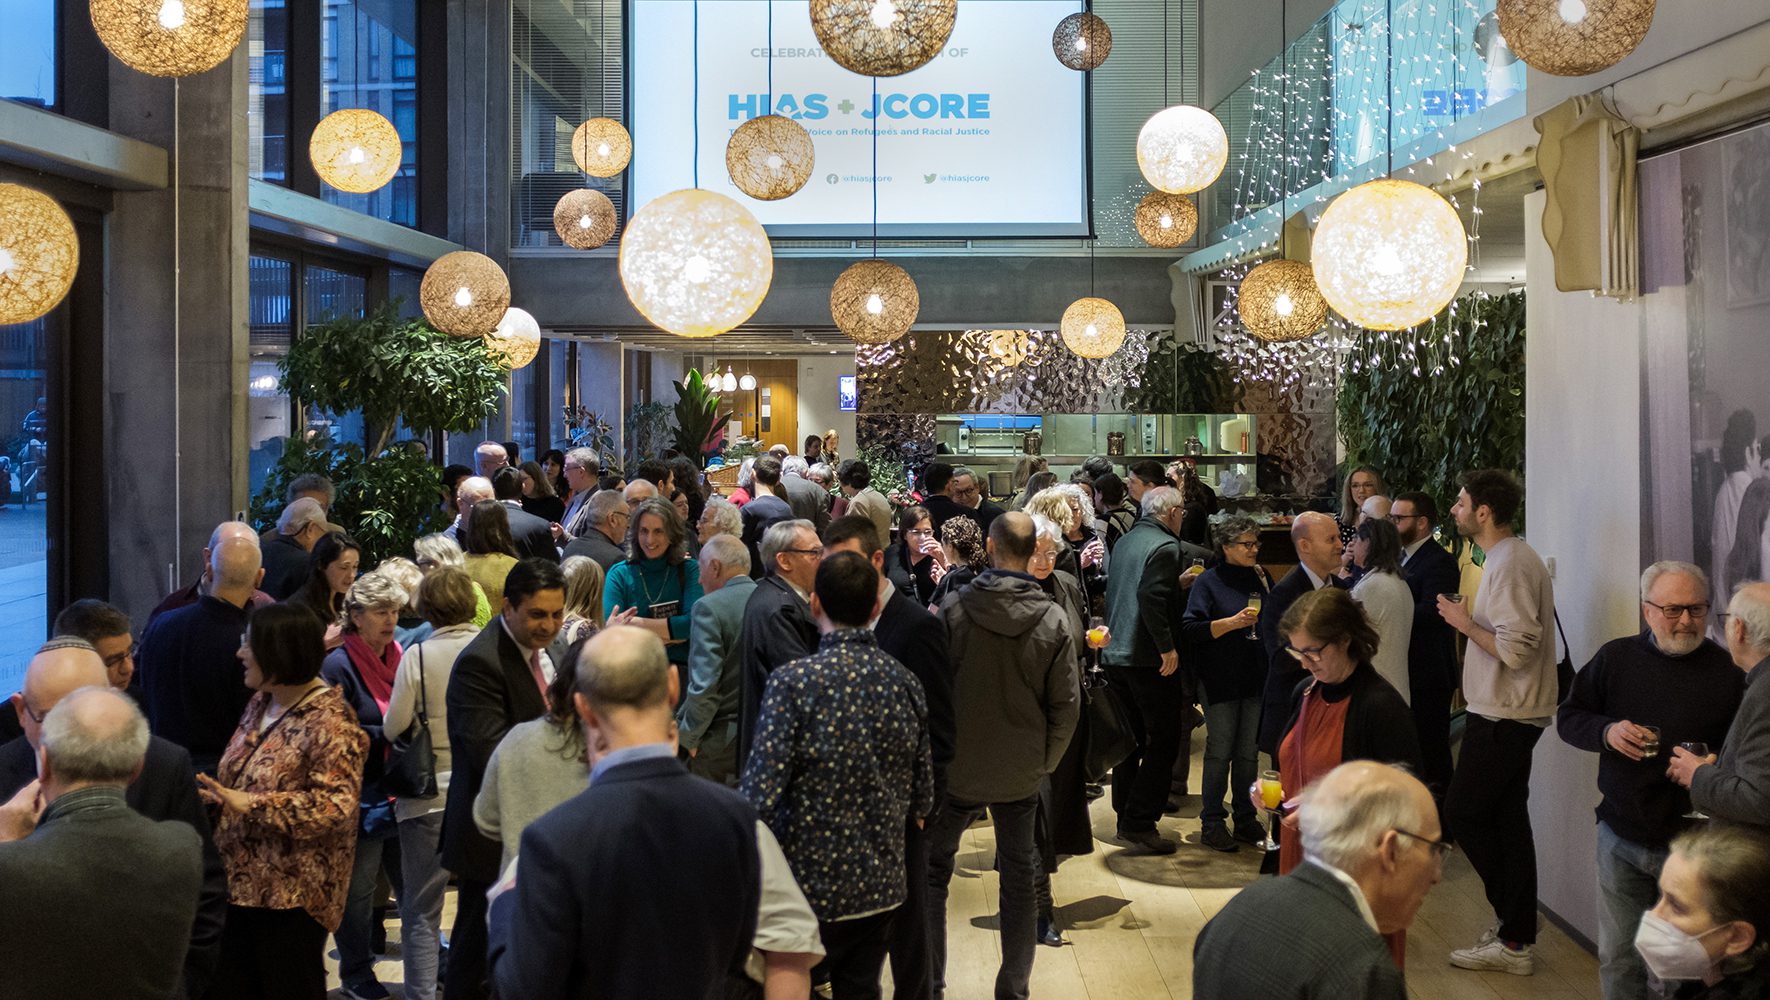 Guests enjoy a reception following the HIAS+JCORE launch event